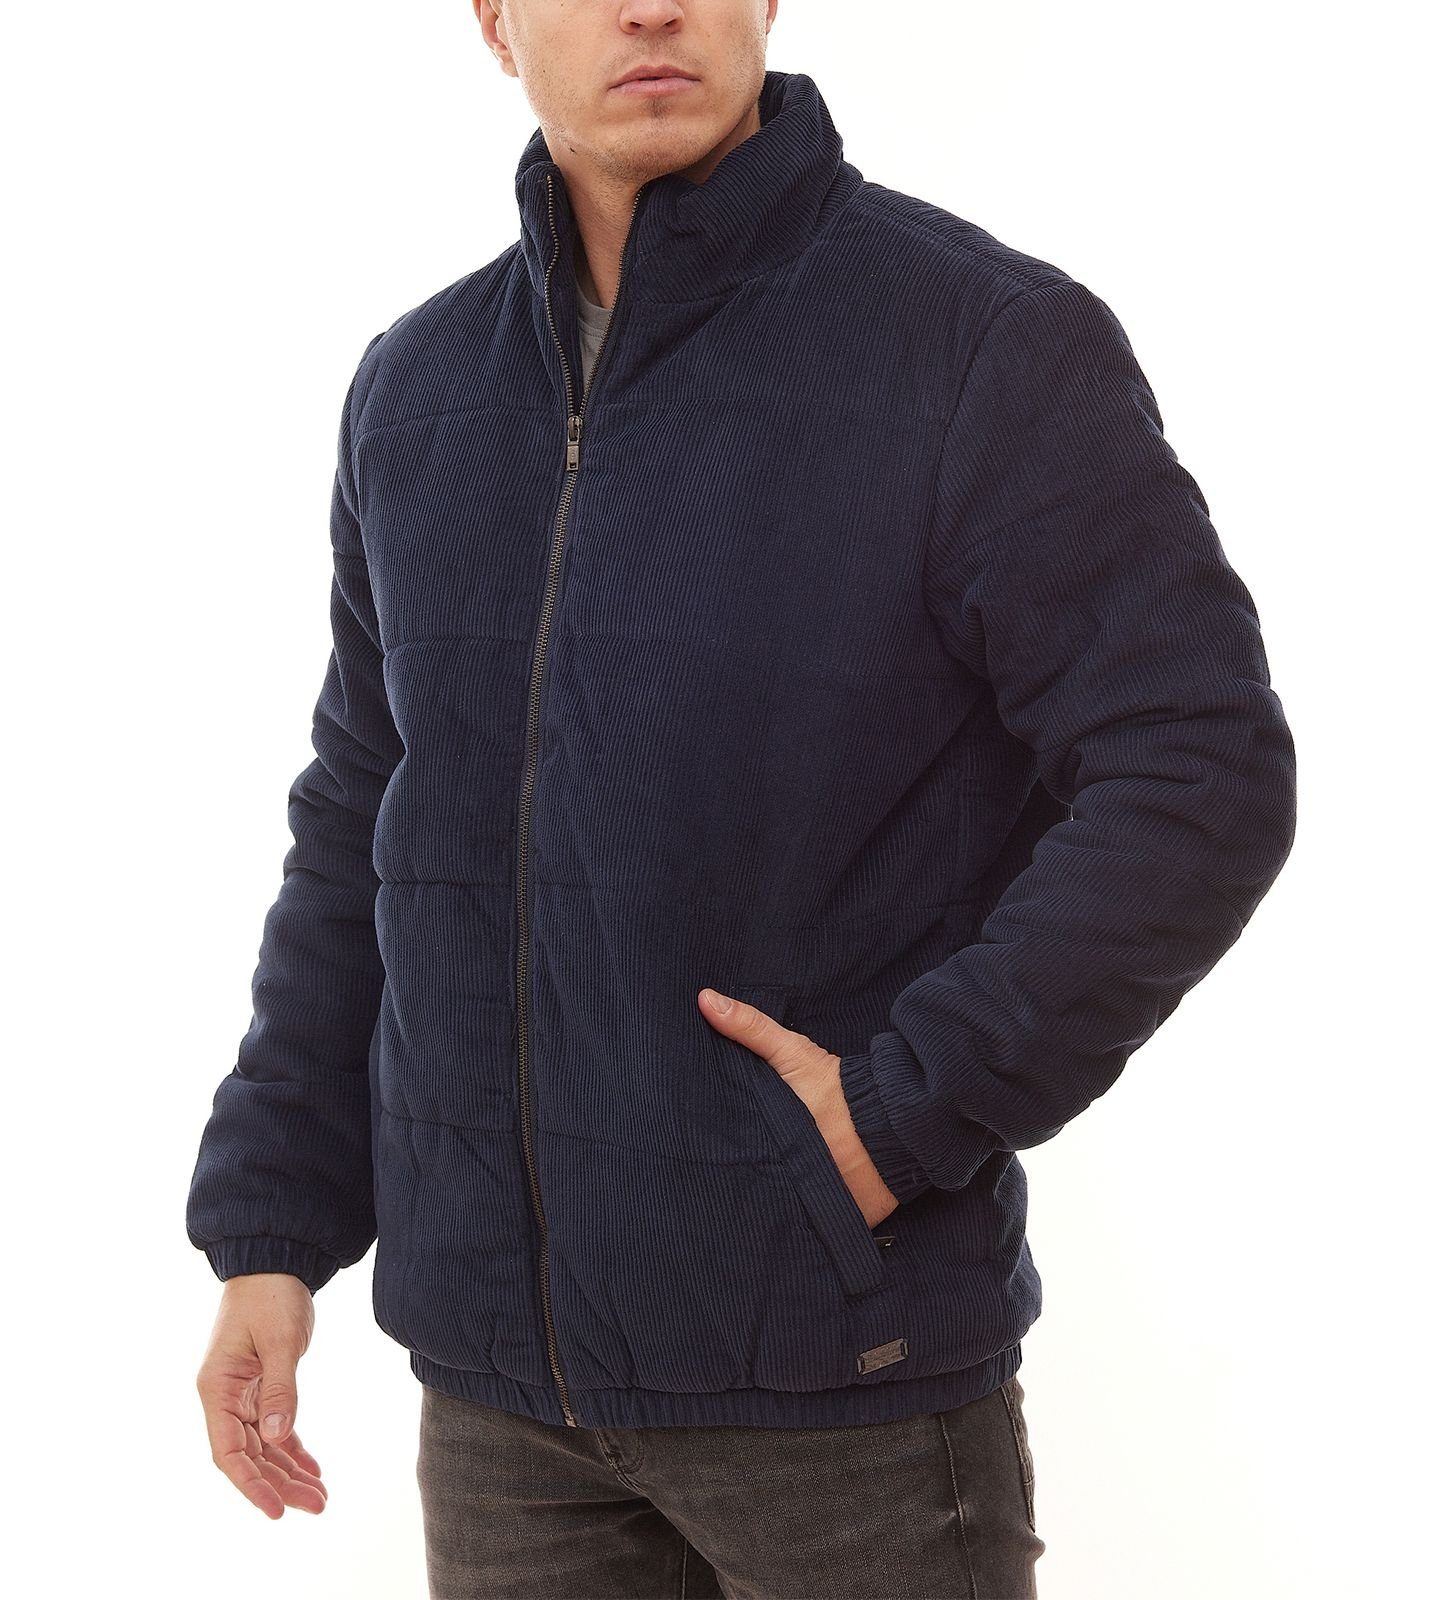 Sodio Blau aus Cord-Jacke Übergangs-Jacke Herren 20712318 BLEND Outdoorjacke nachhaltige Jacke Baumwolle Blend